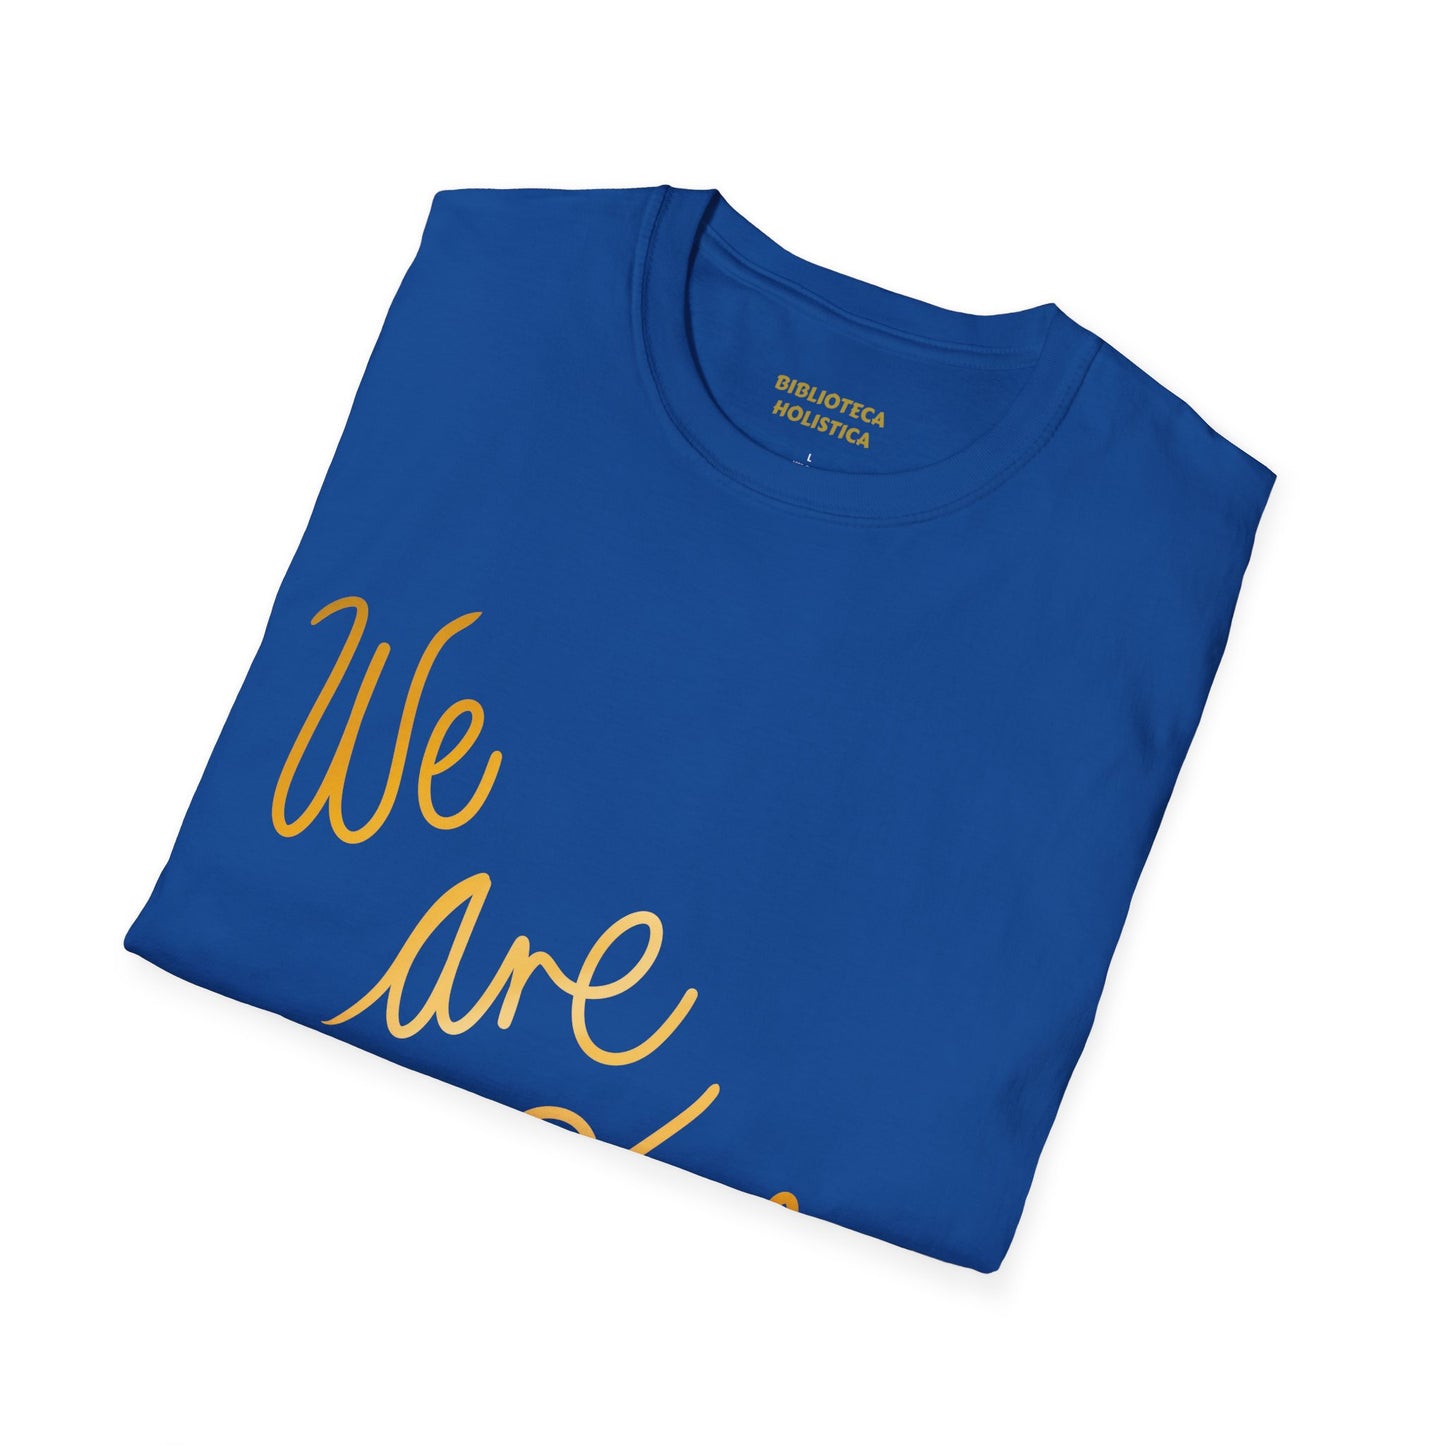 Camiseta "WE ARE ONE"